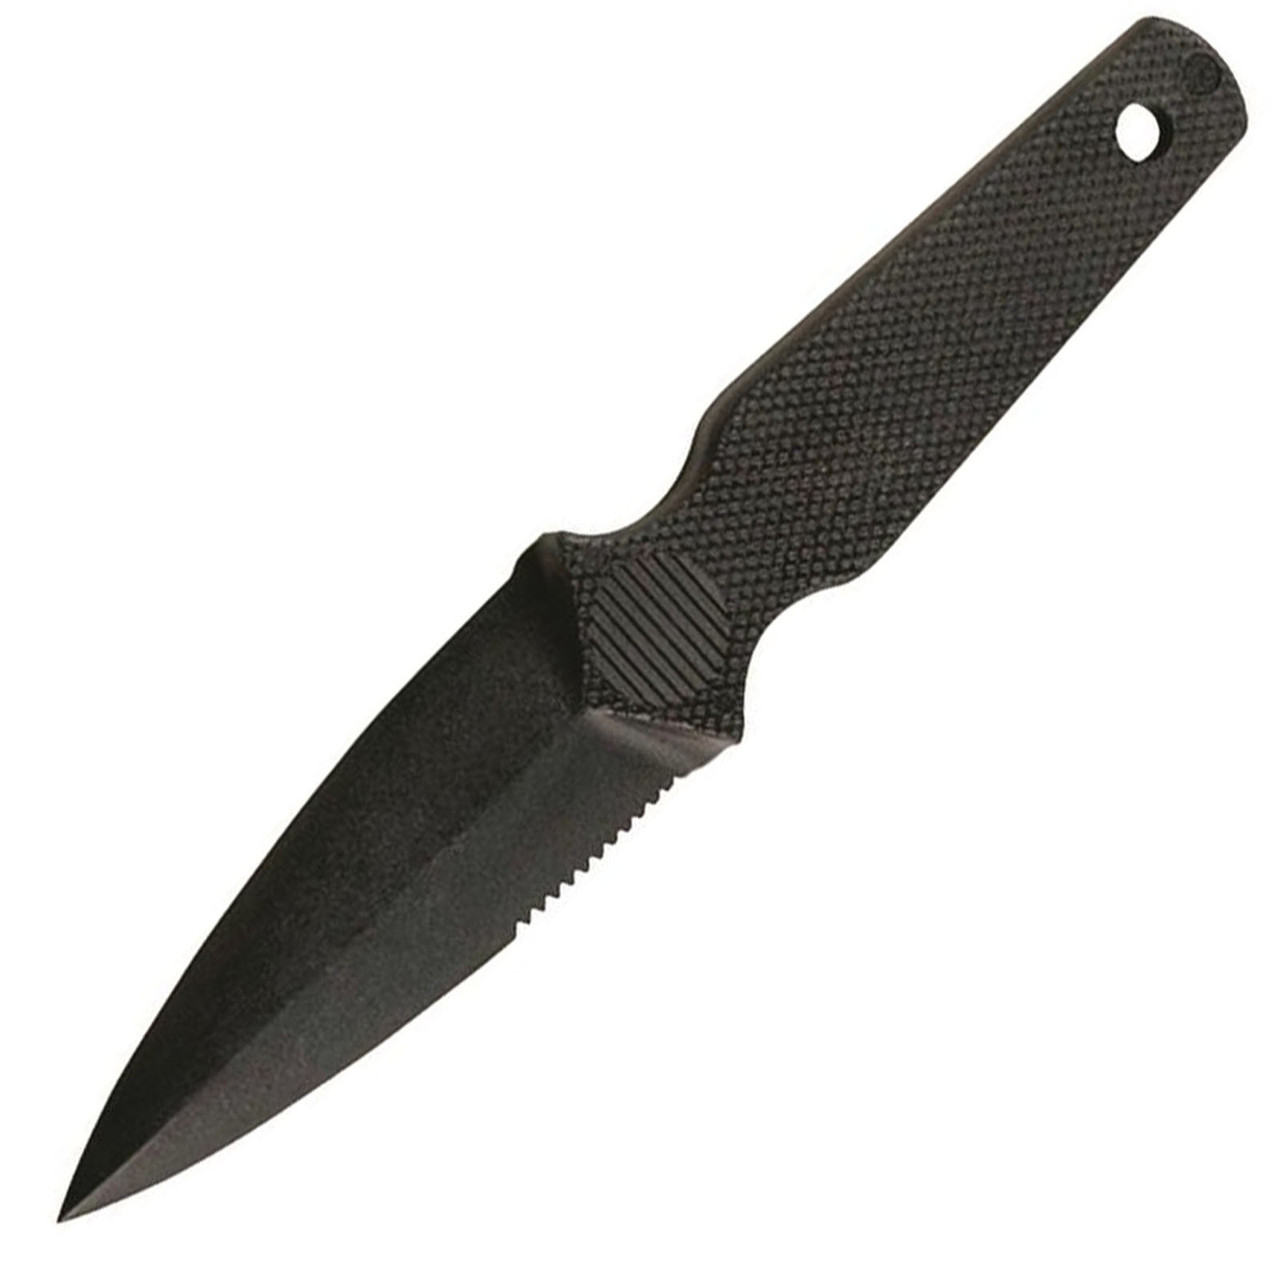 Broadhead Arrow & Knife Sharpener - Lansky